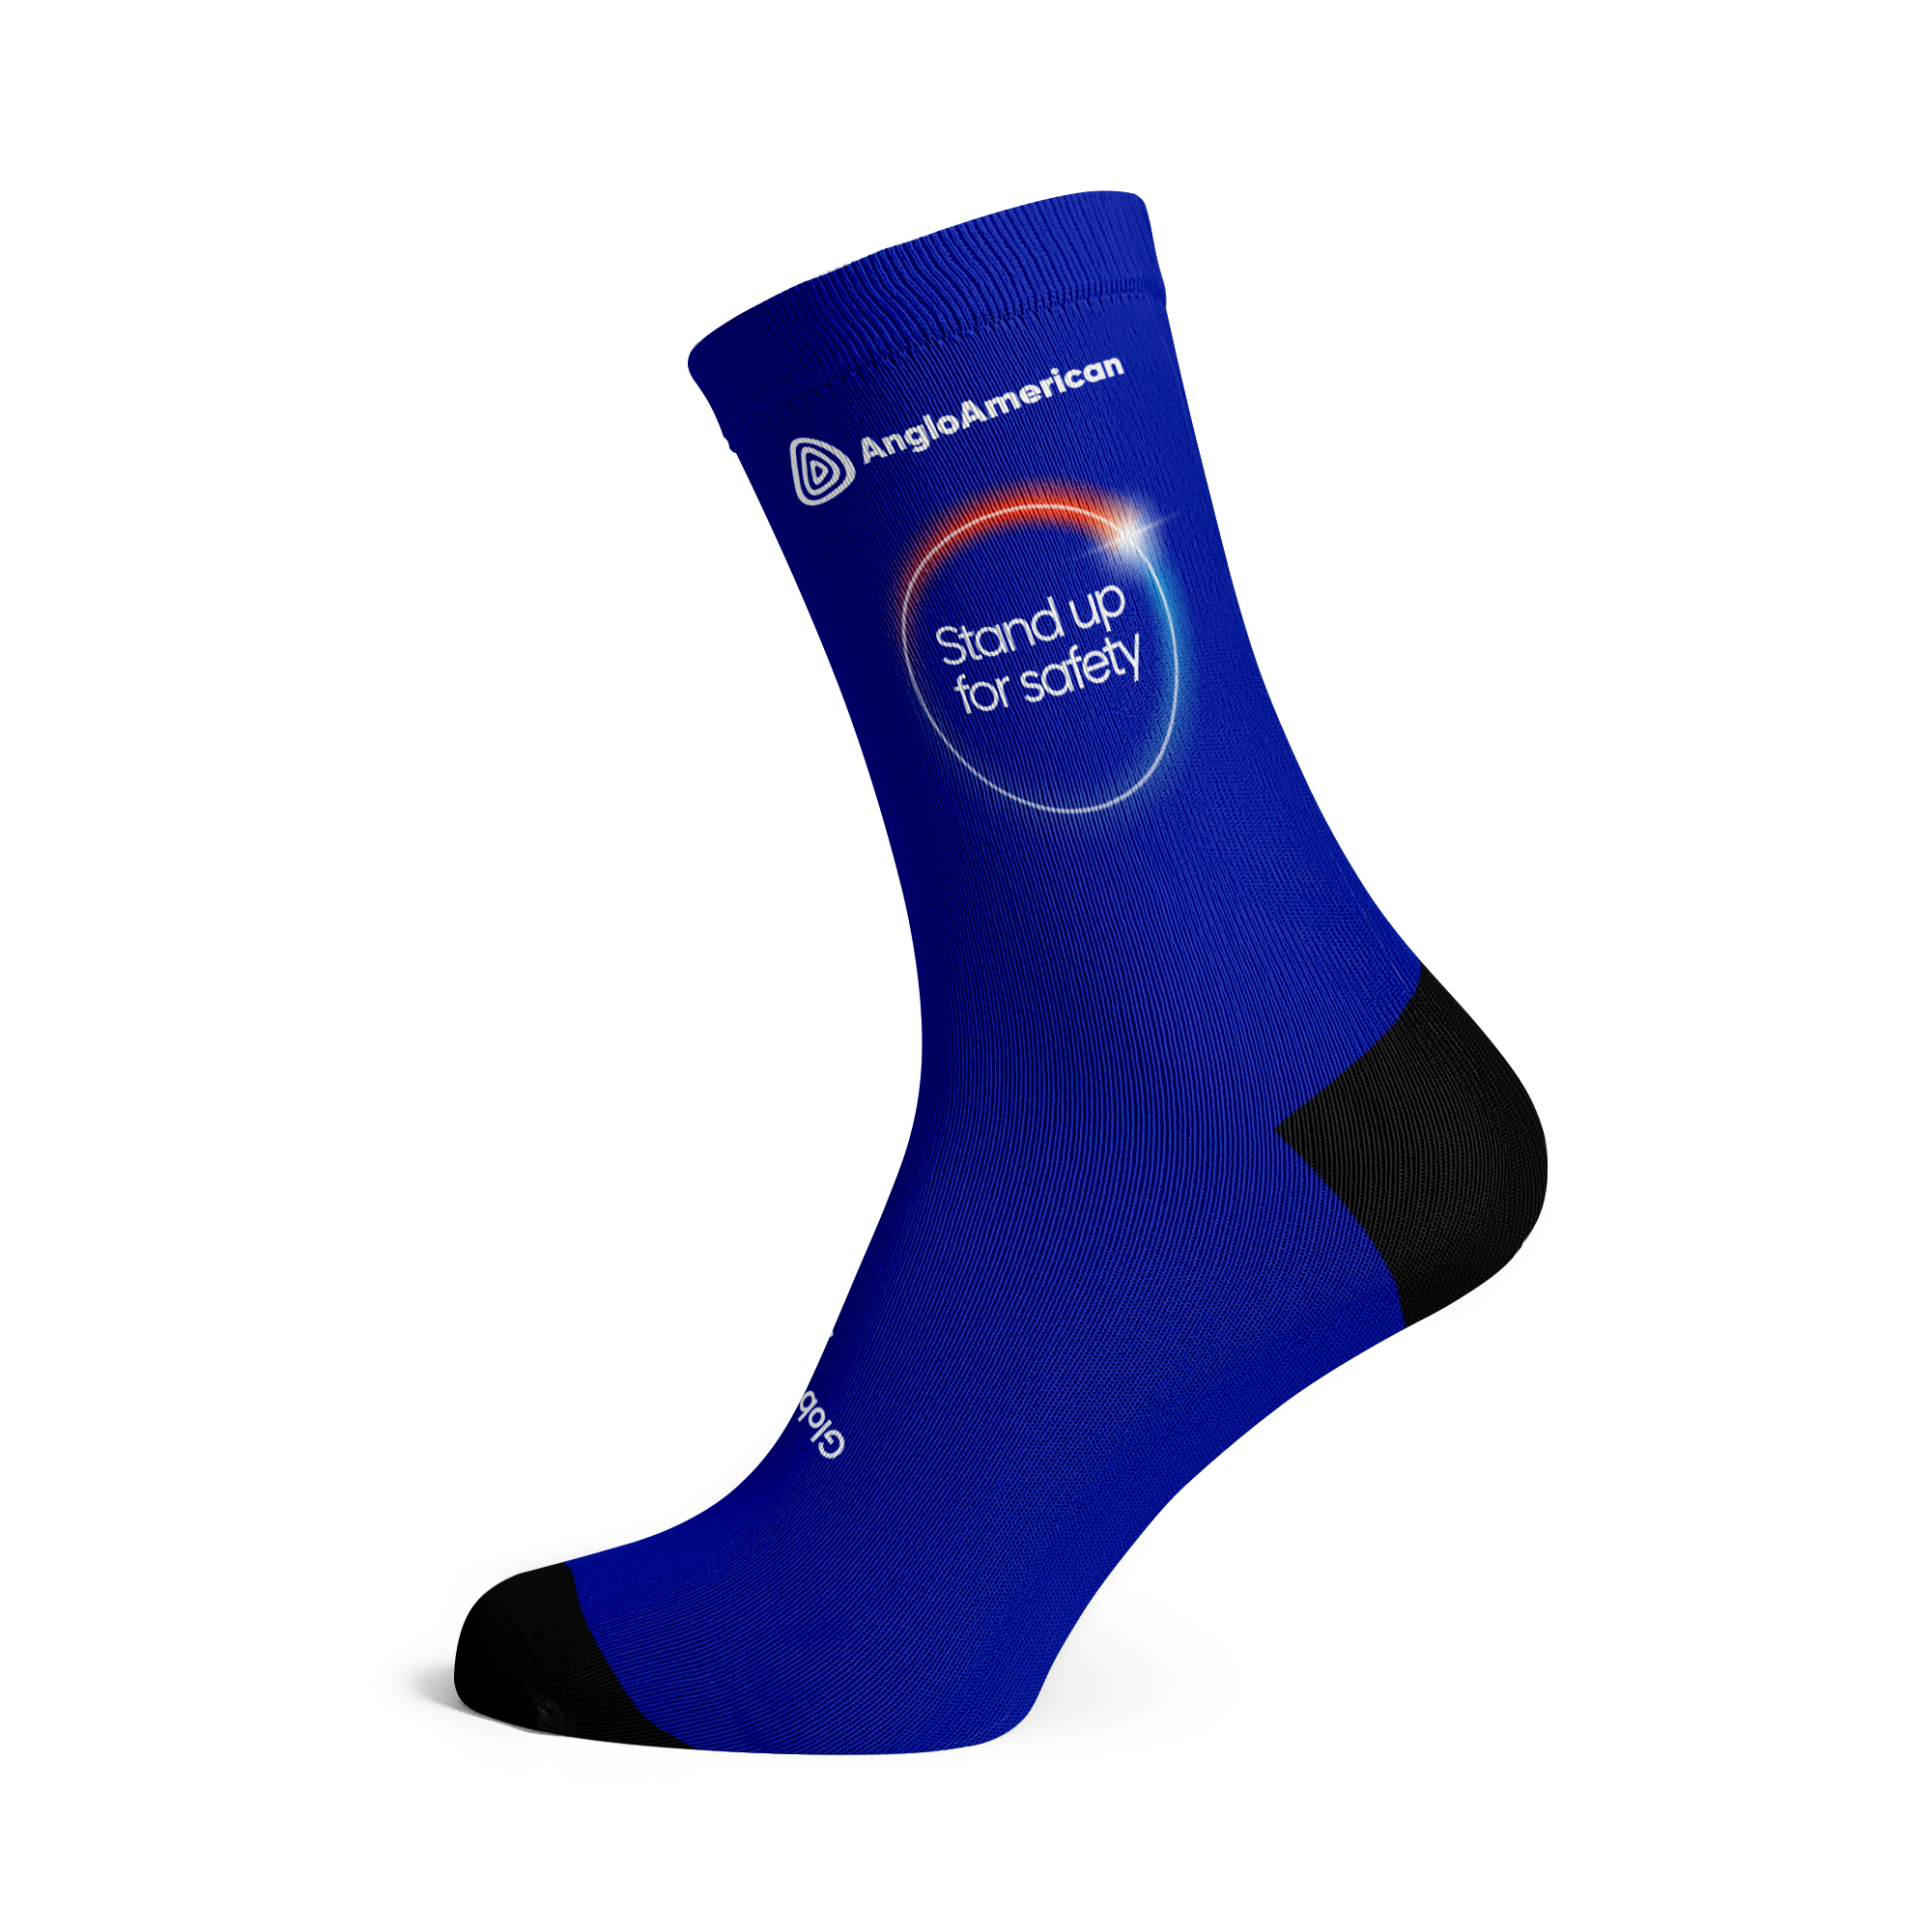 Custom Branded Corporate Socks - Made in South Africa